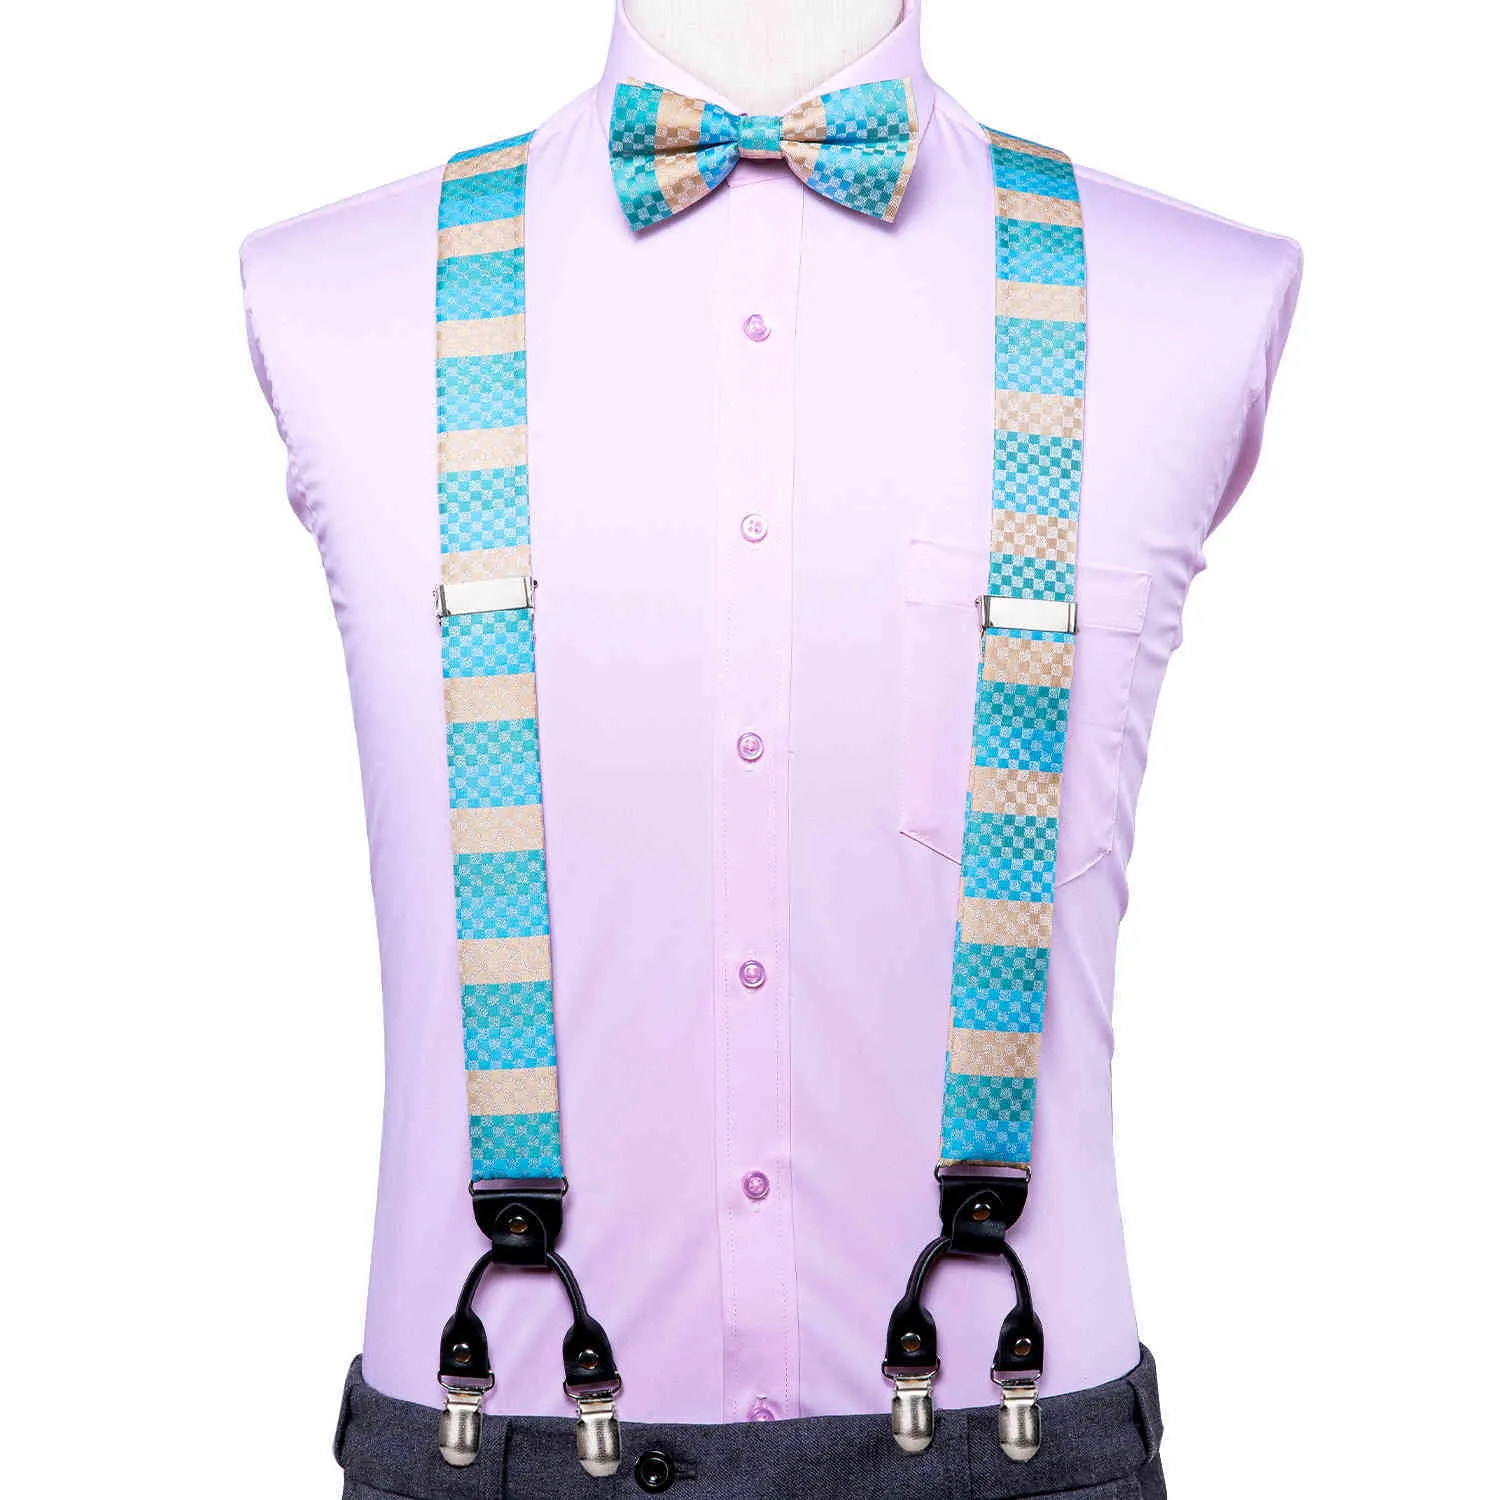 Hi-Tie 6 Clips on Men Suspenders Braces 35mm Wide Vintage Fashion Elastic Adjustable Suspender and Bow Tie for Wedding Party